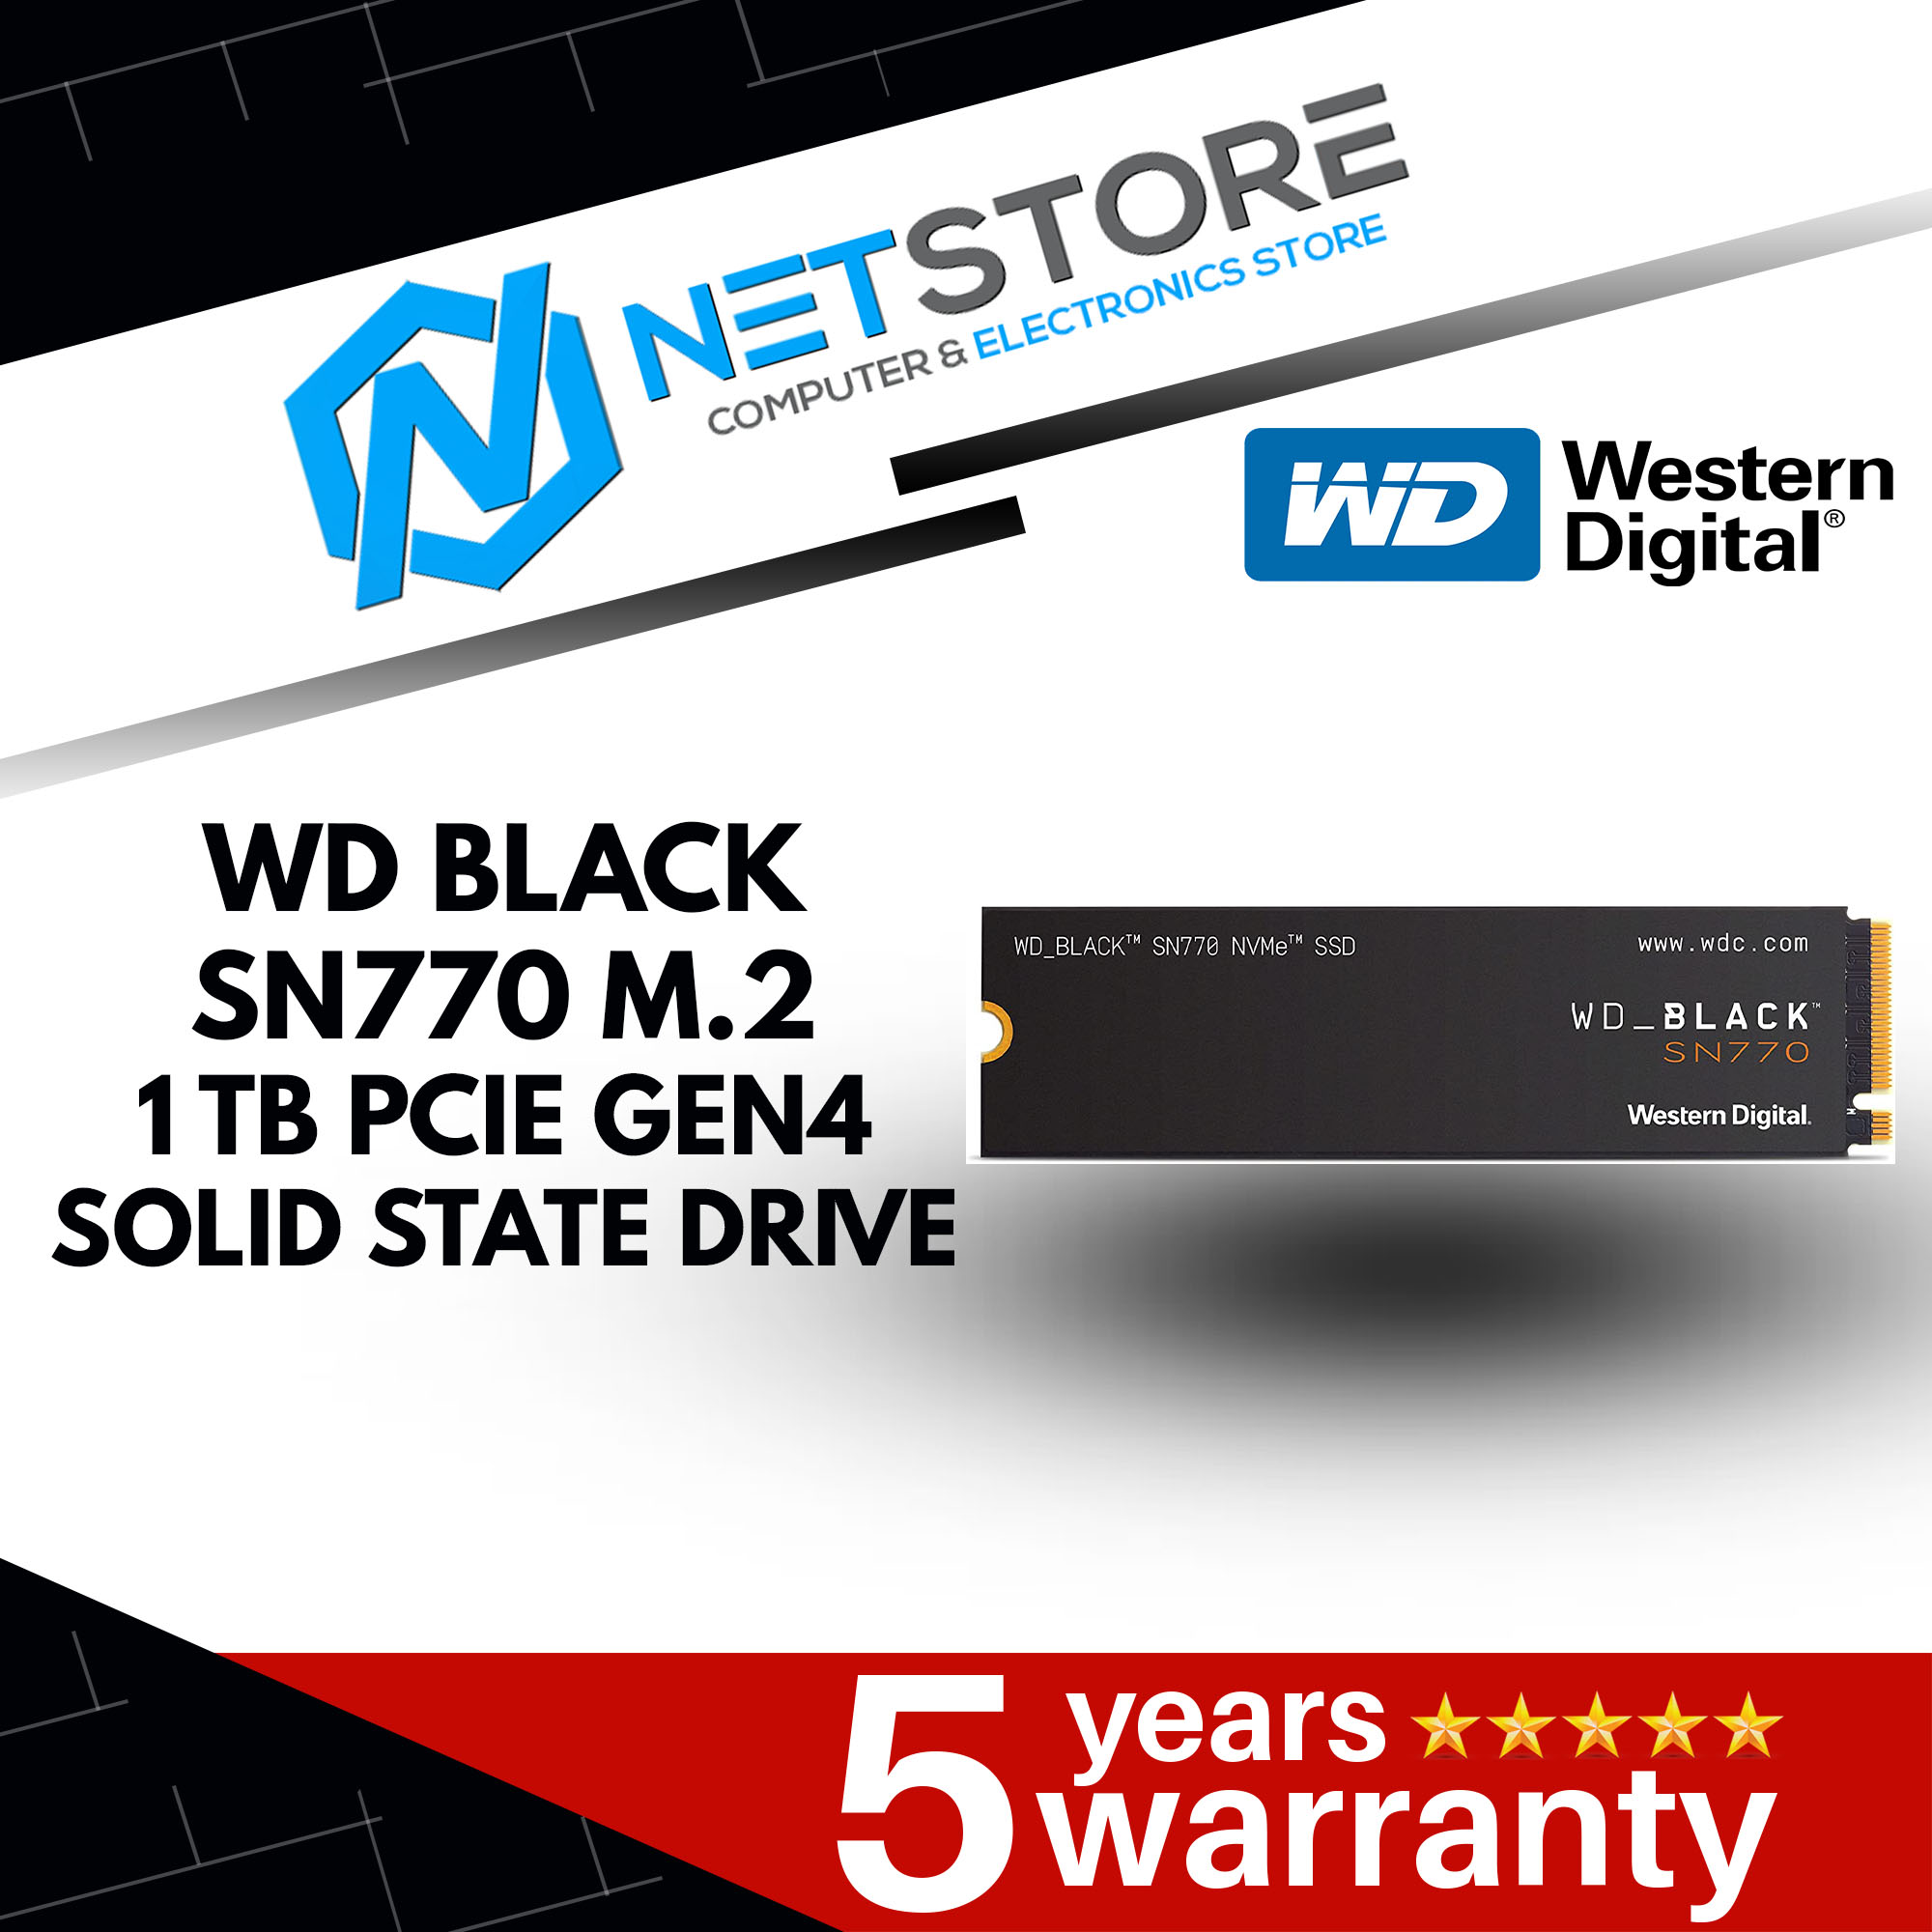 WESTERN DIGITAL WD BLACK SN770 M.2 1 TB PCIE GEN4 SOLID STATE DRIVE